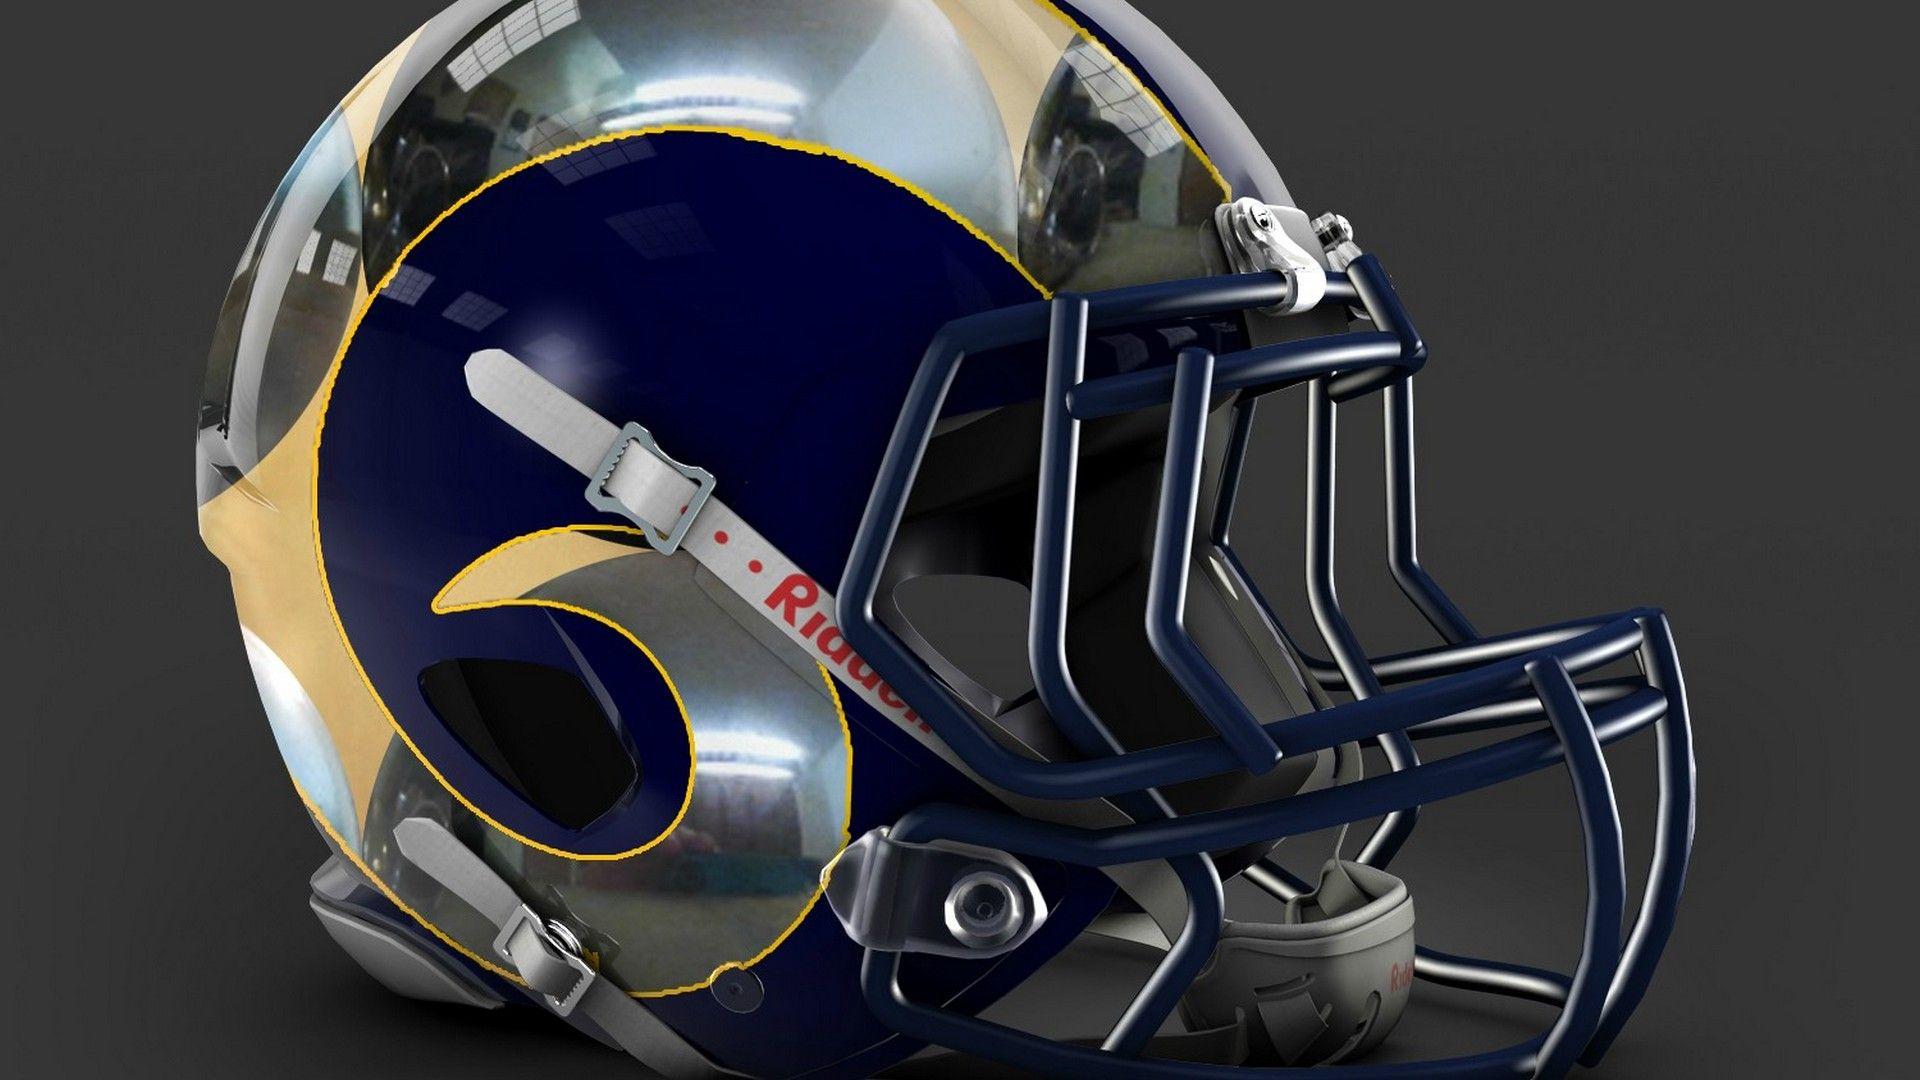 Los Angeles Rams For PC Wallpaper NFL Football Wallpaper. Nfl football wallpaper, Nfl football helmets, Football helmet design